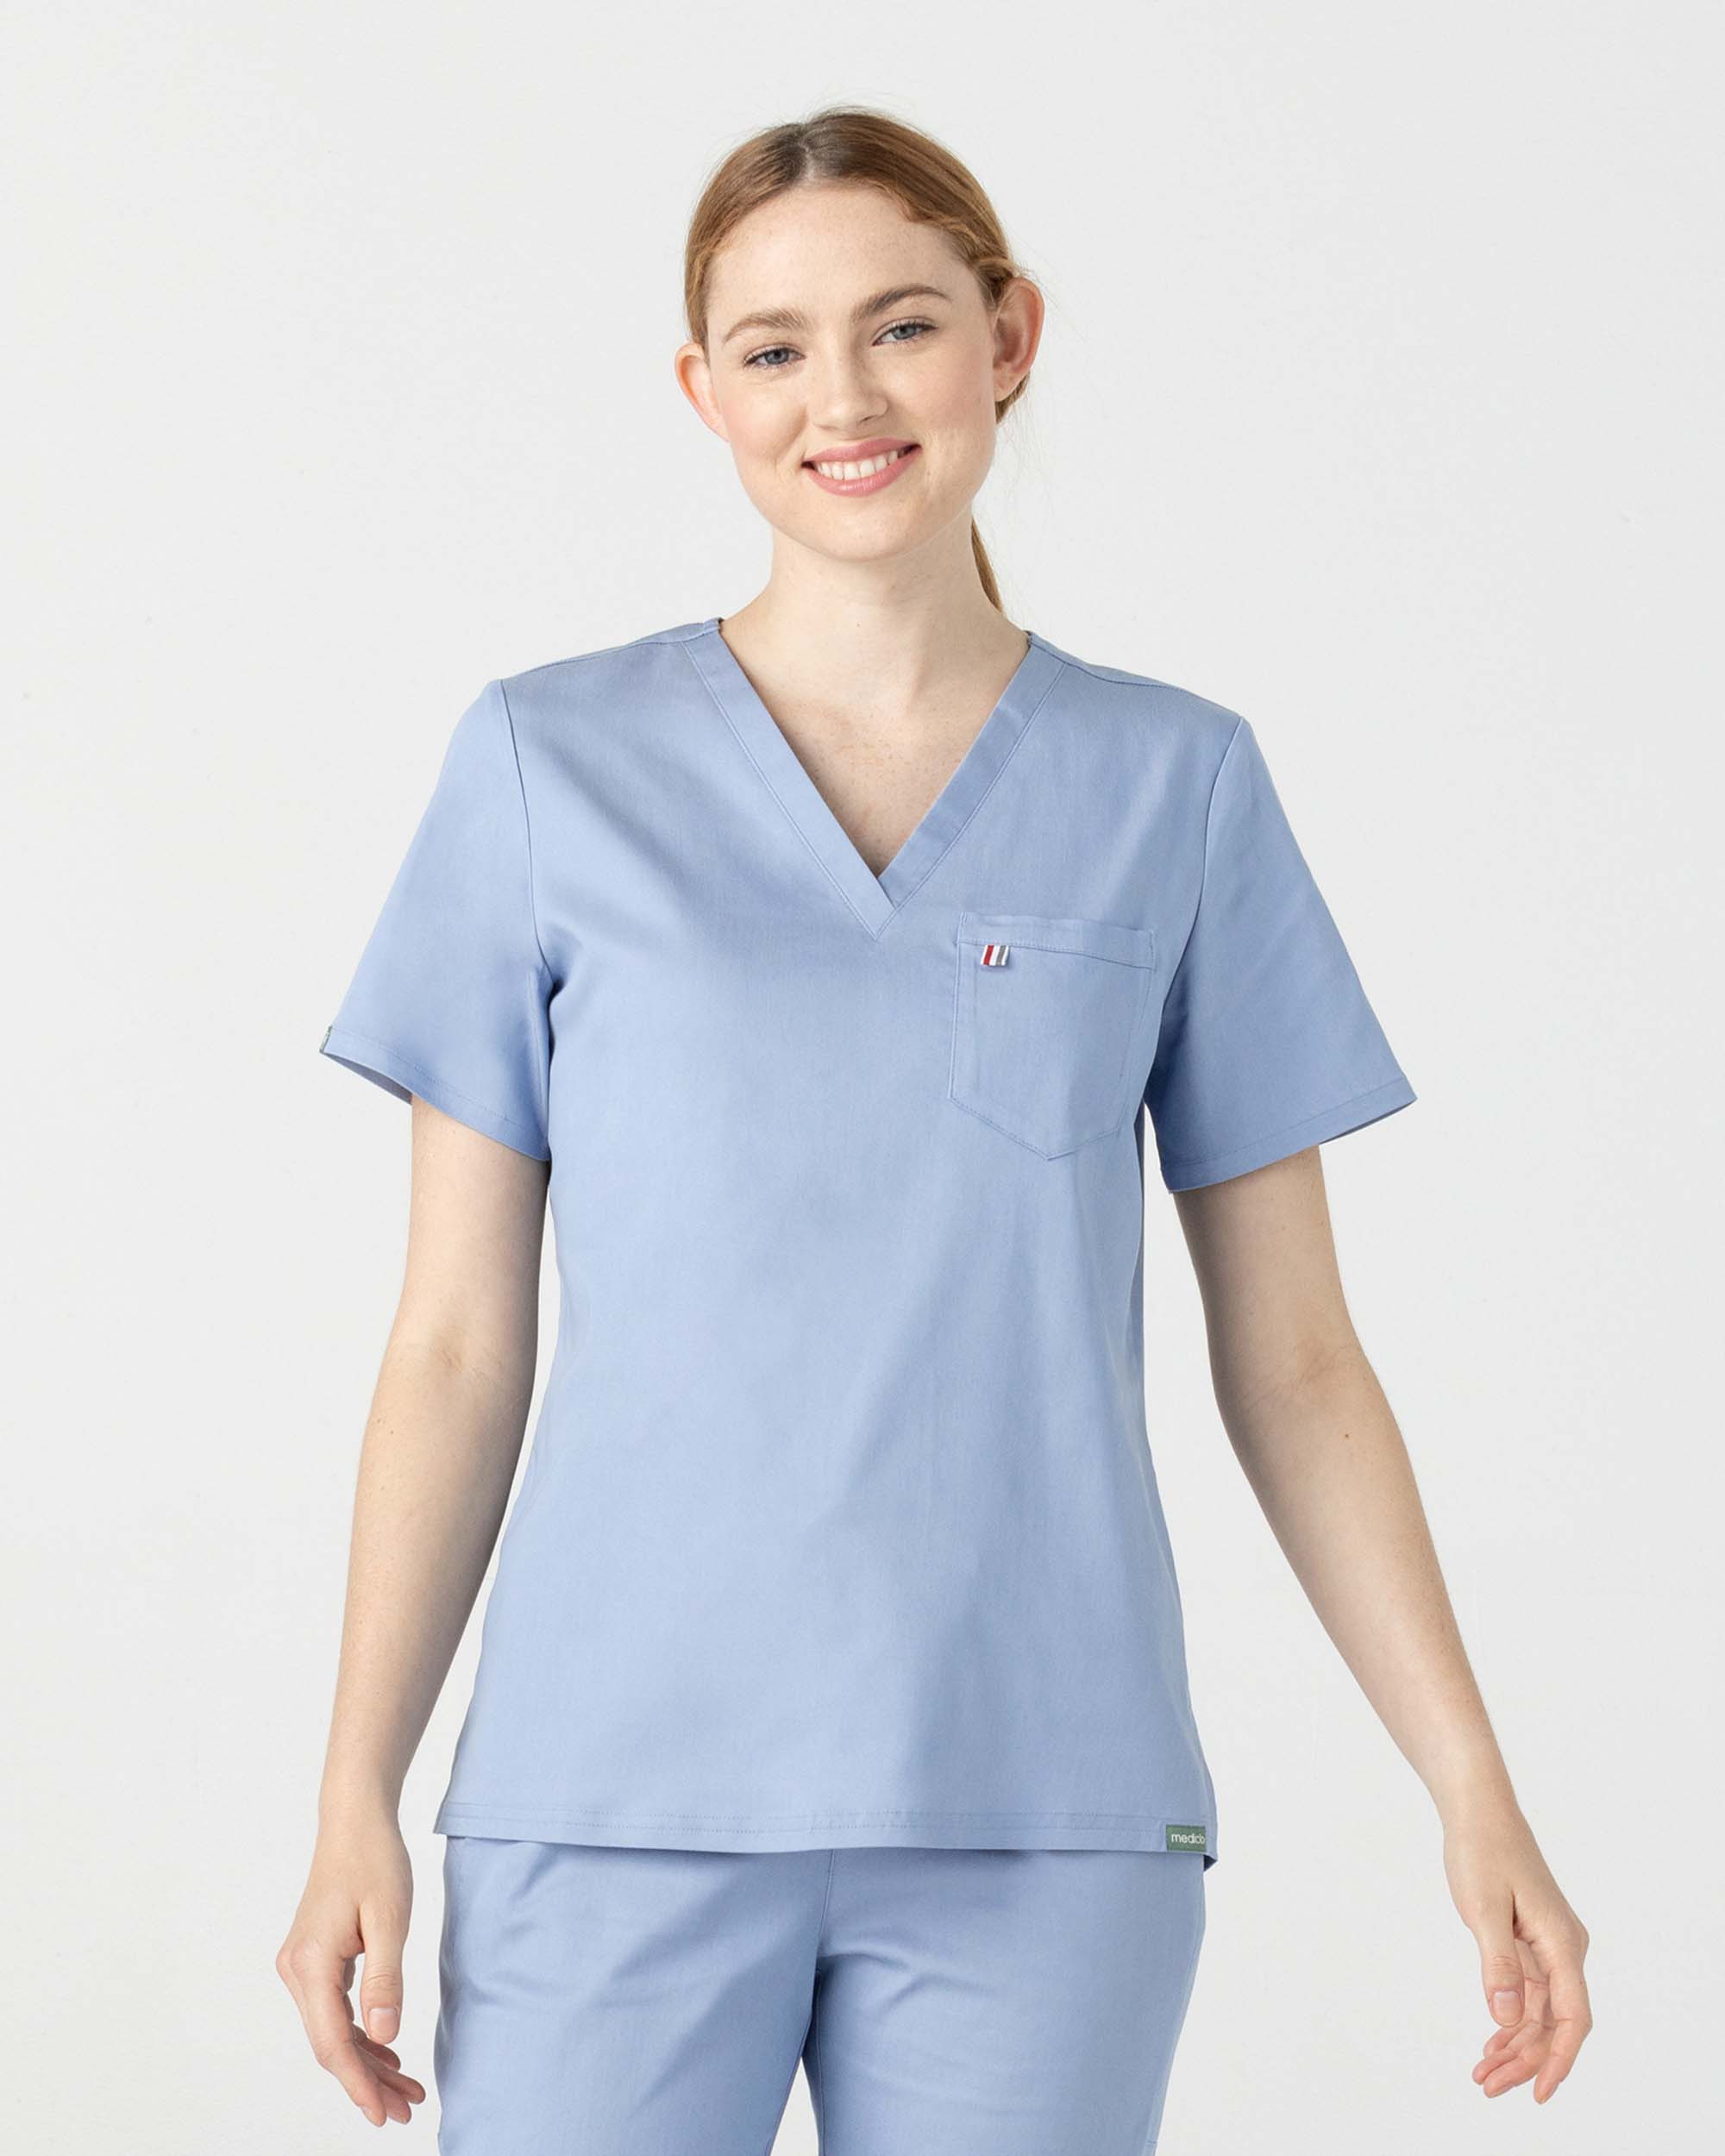 Shop Women's Underscrubs  Quality Medical Clothing at scrub